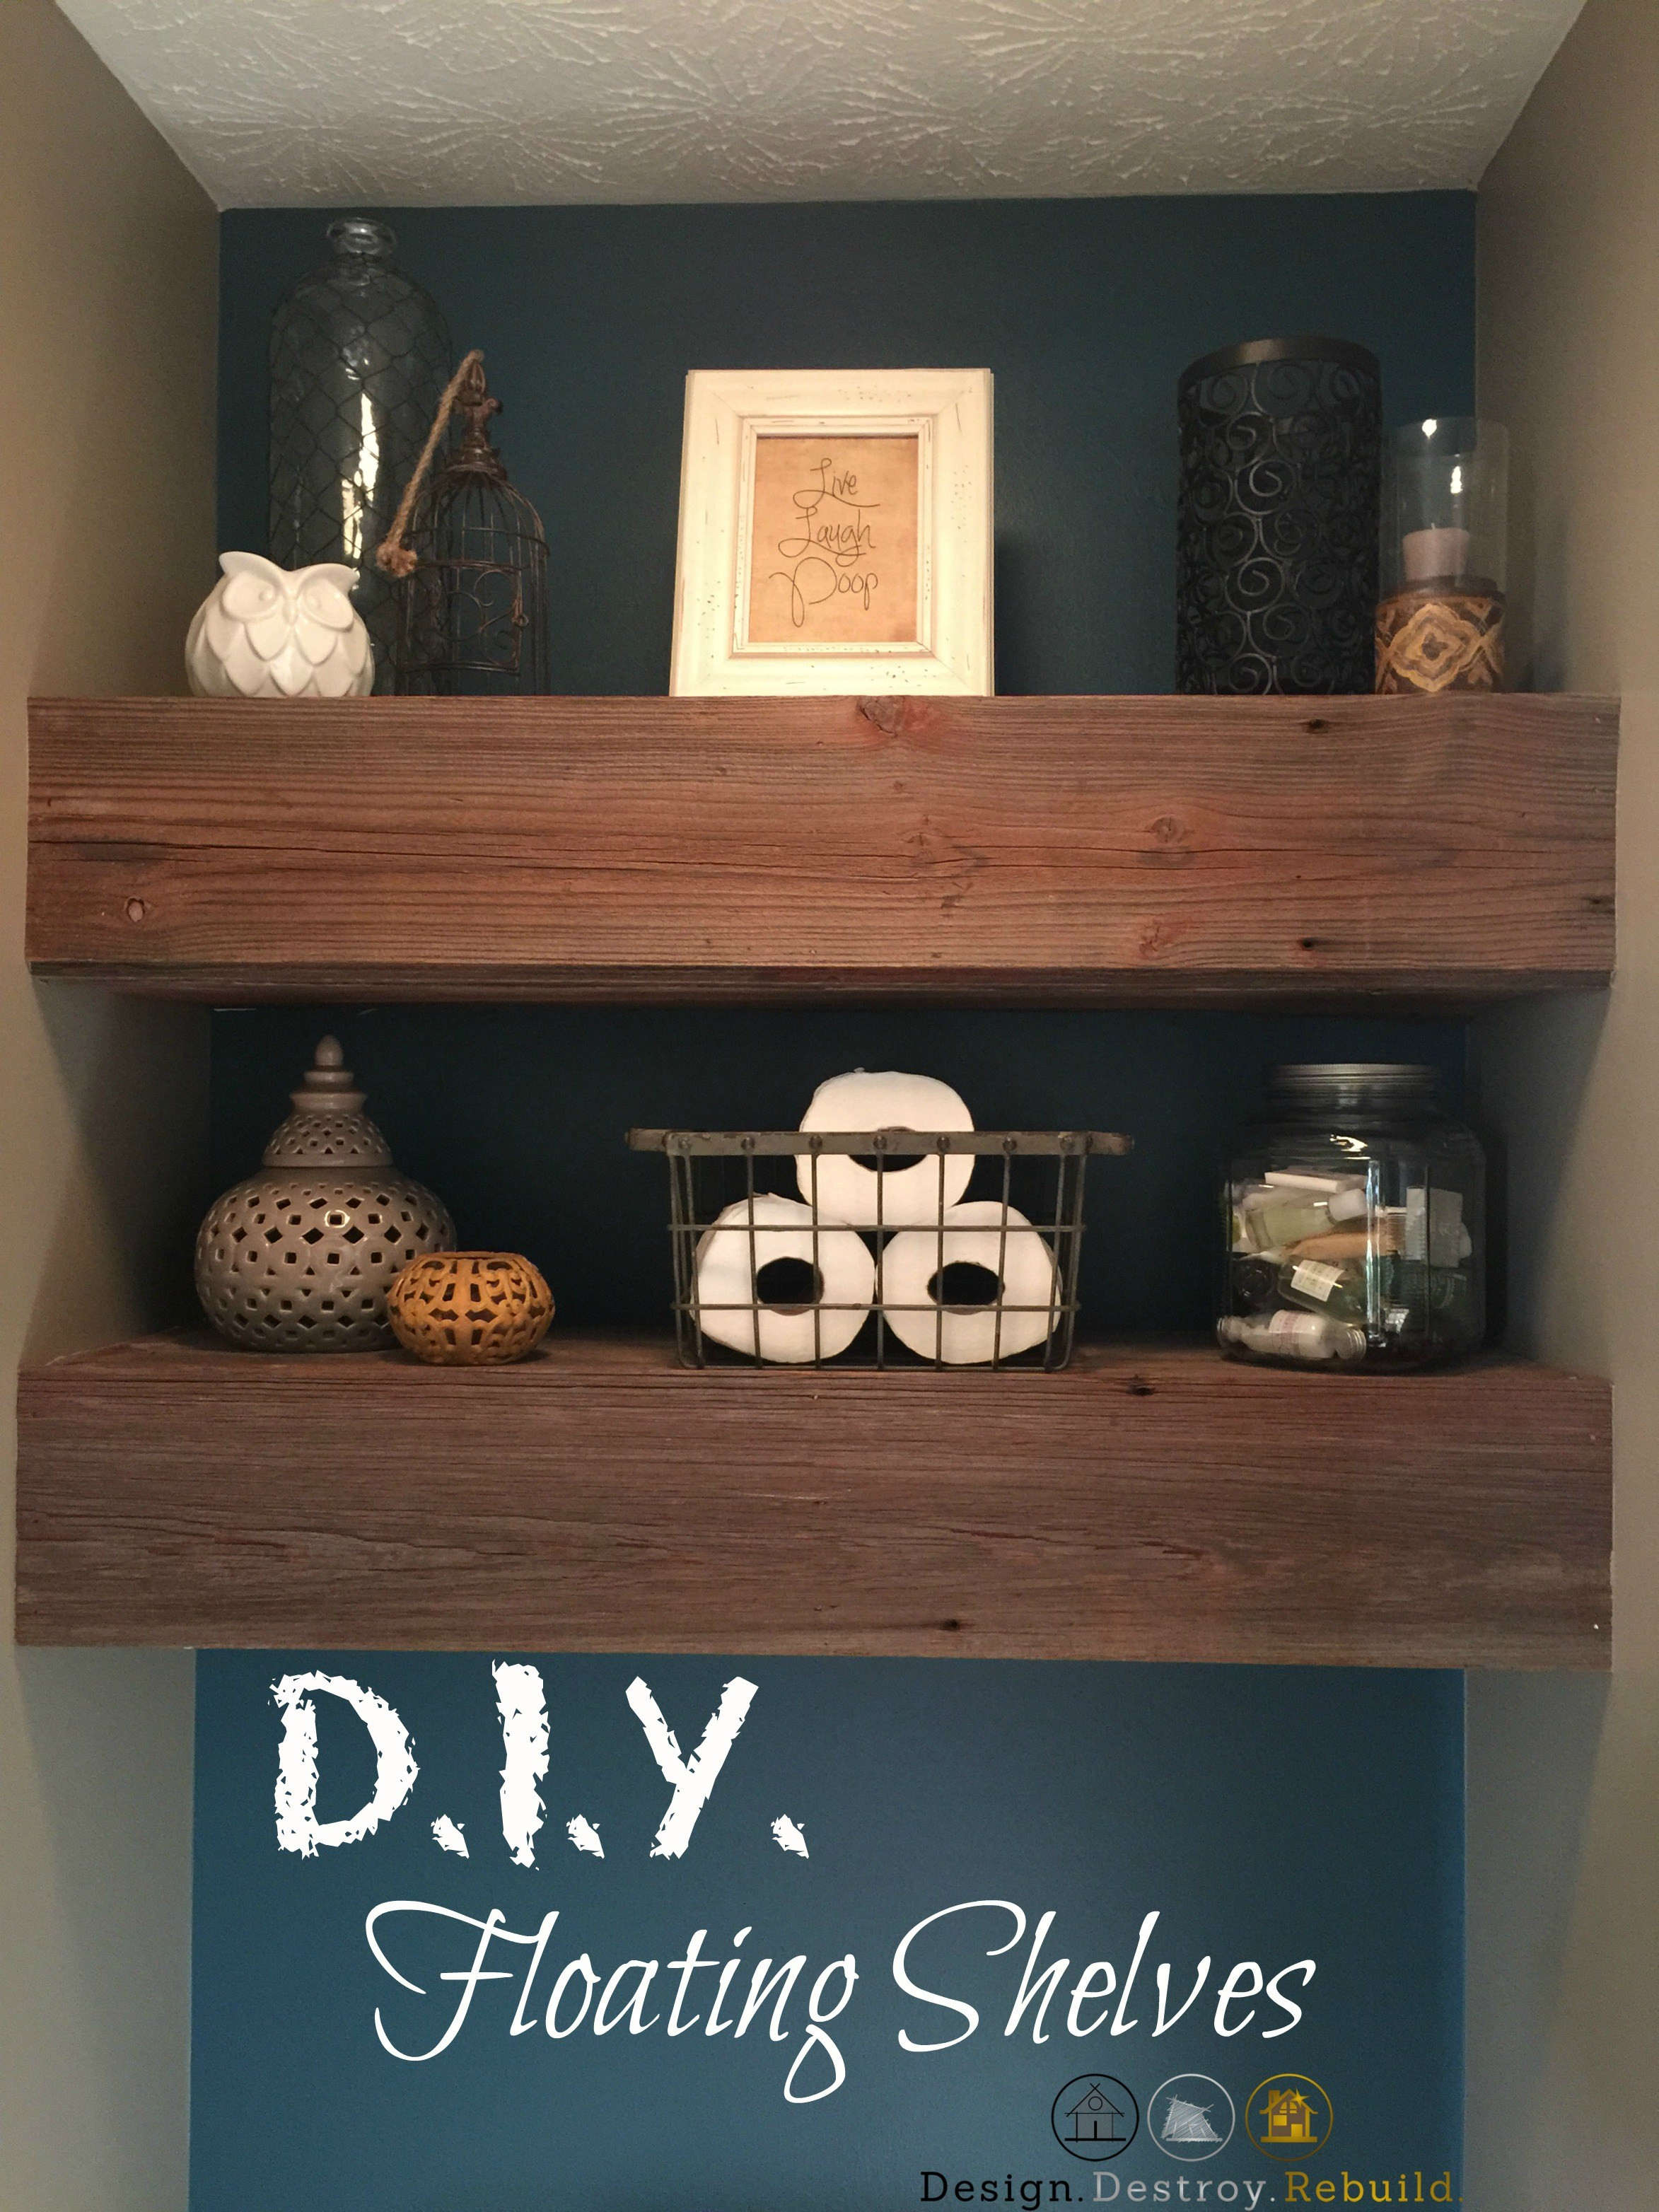 Best ideas about DIY Reclaimed Wood Shelf
. Save or Pin DIY Reclaimed Wood Floating Shelves Design Destroy Now.